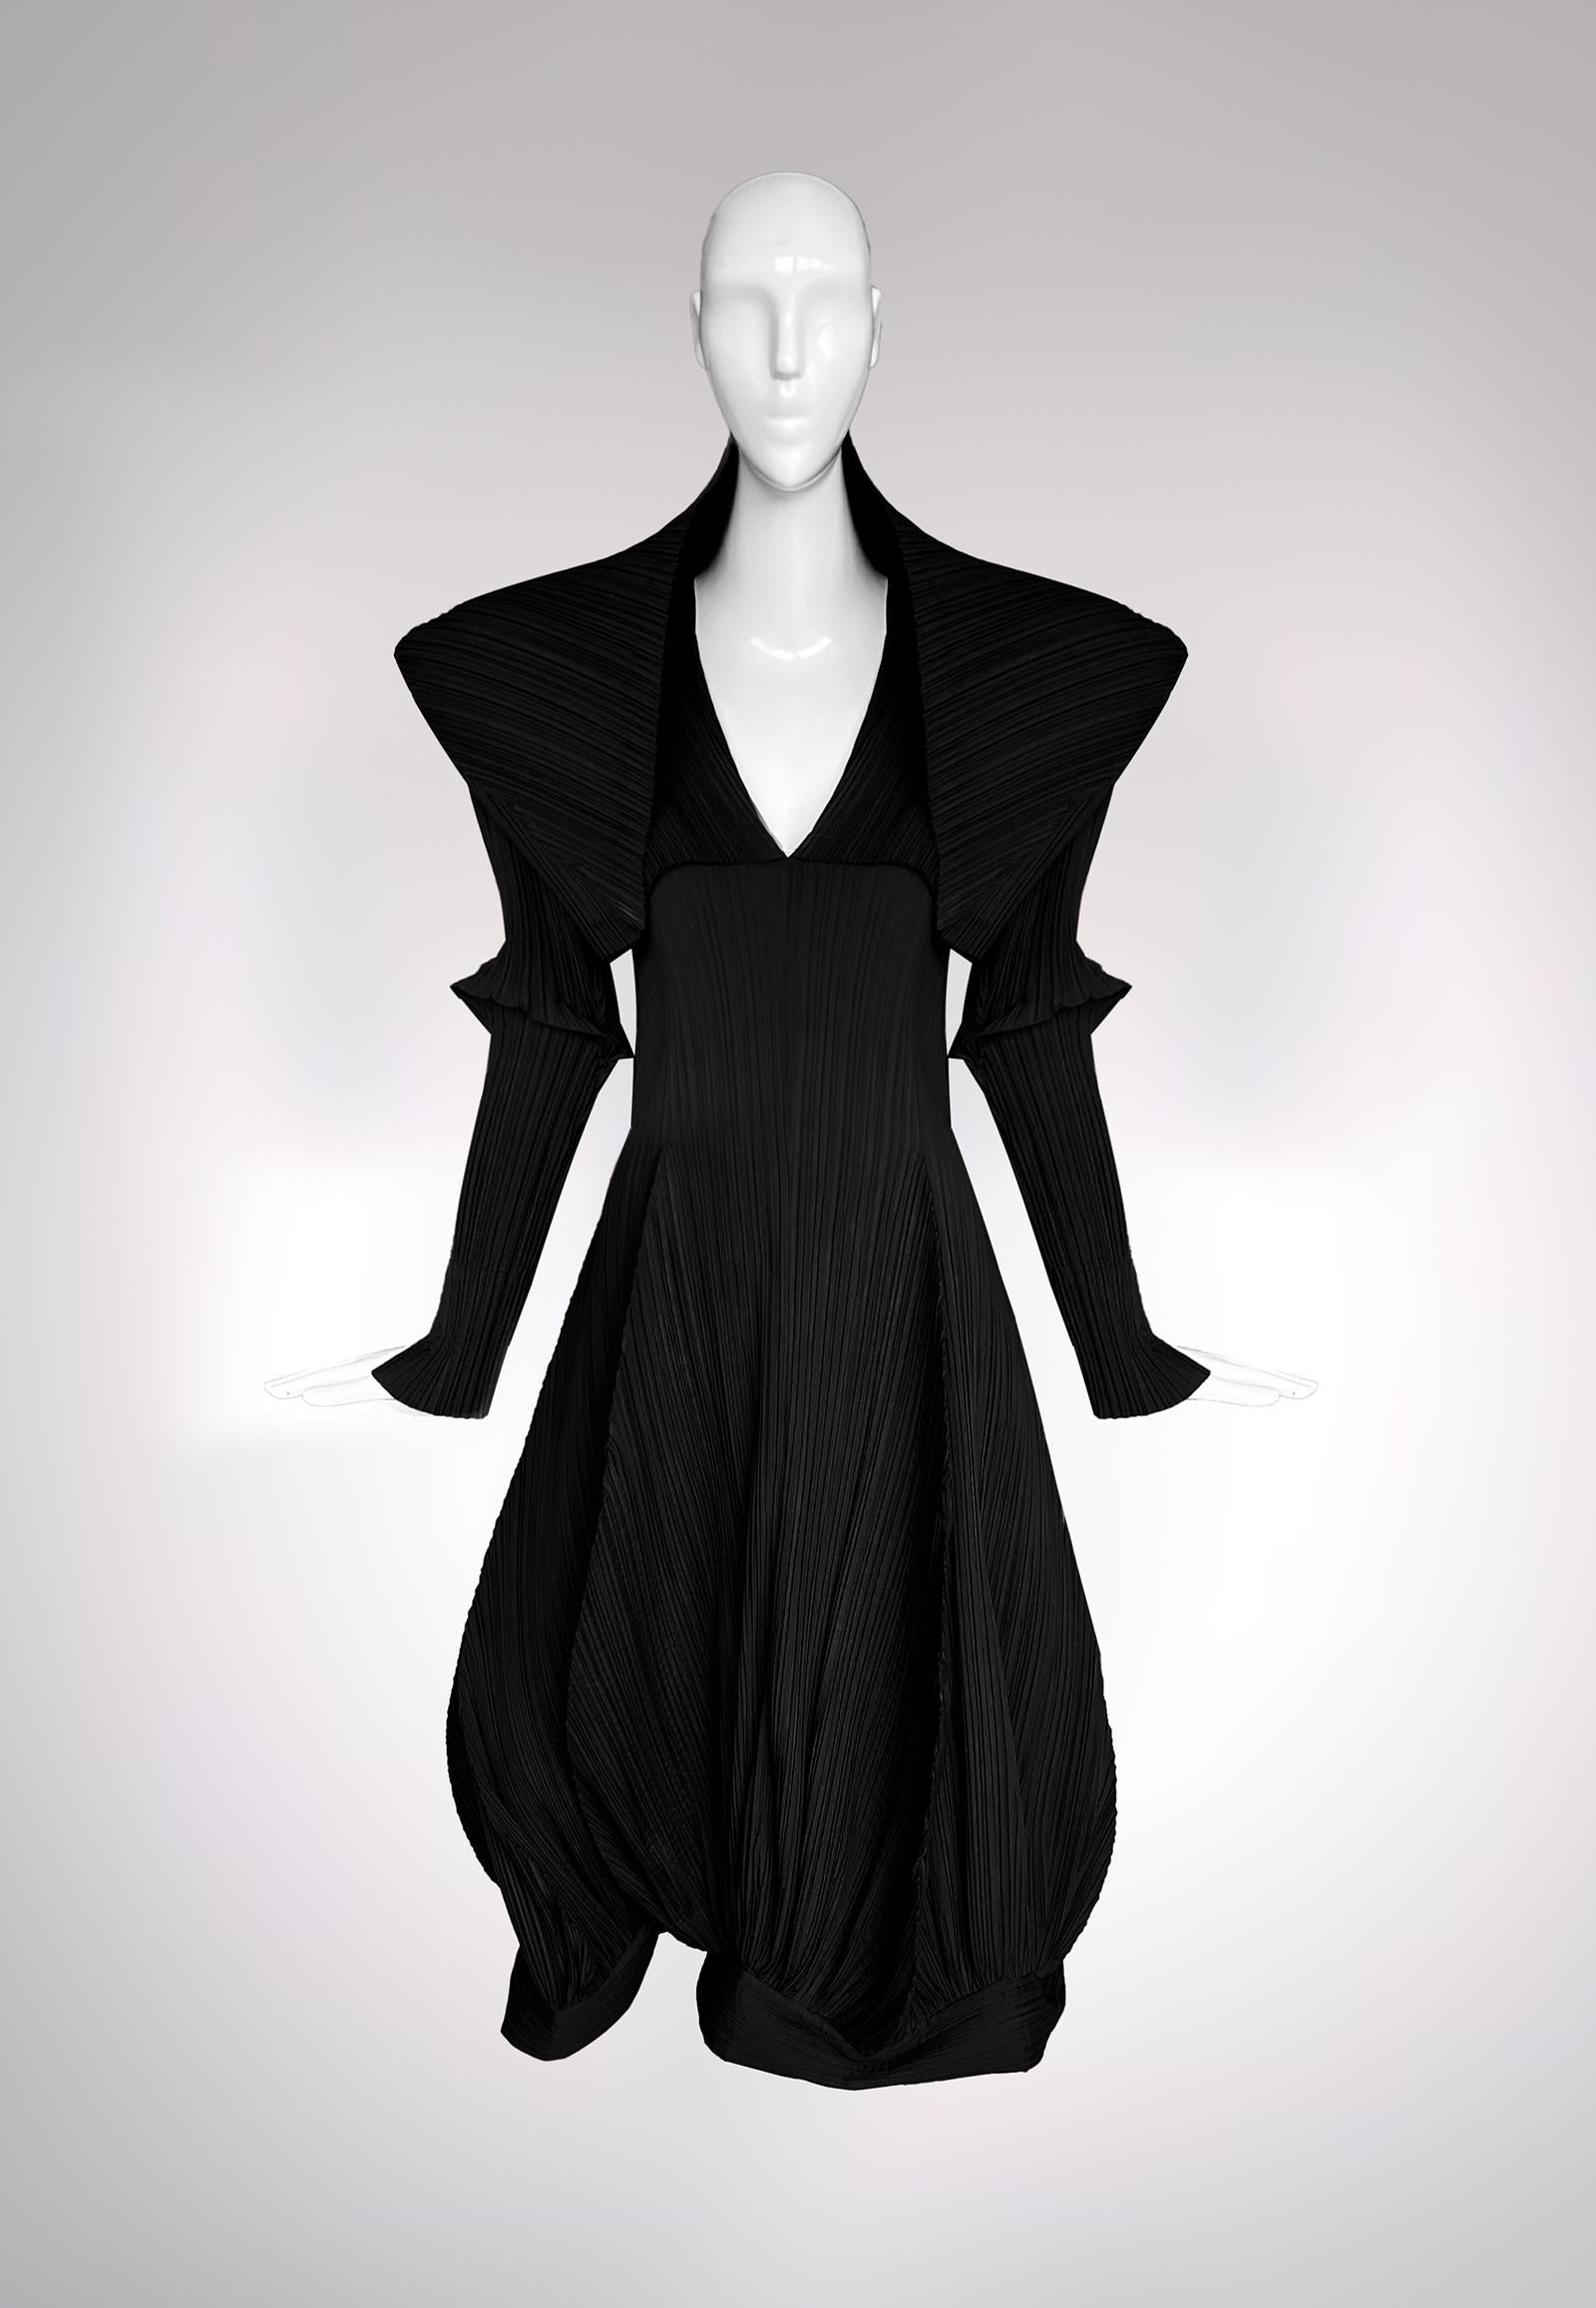 Iconic ISSEY MIYAKE Tulip Dress Black Sculptural Editorial Dramatic 4